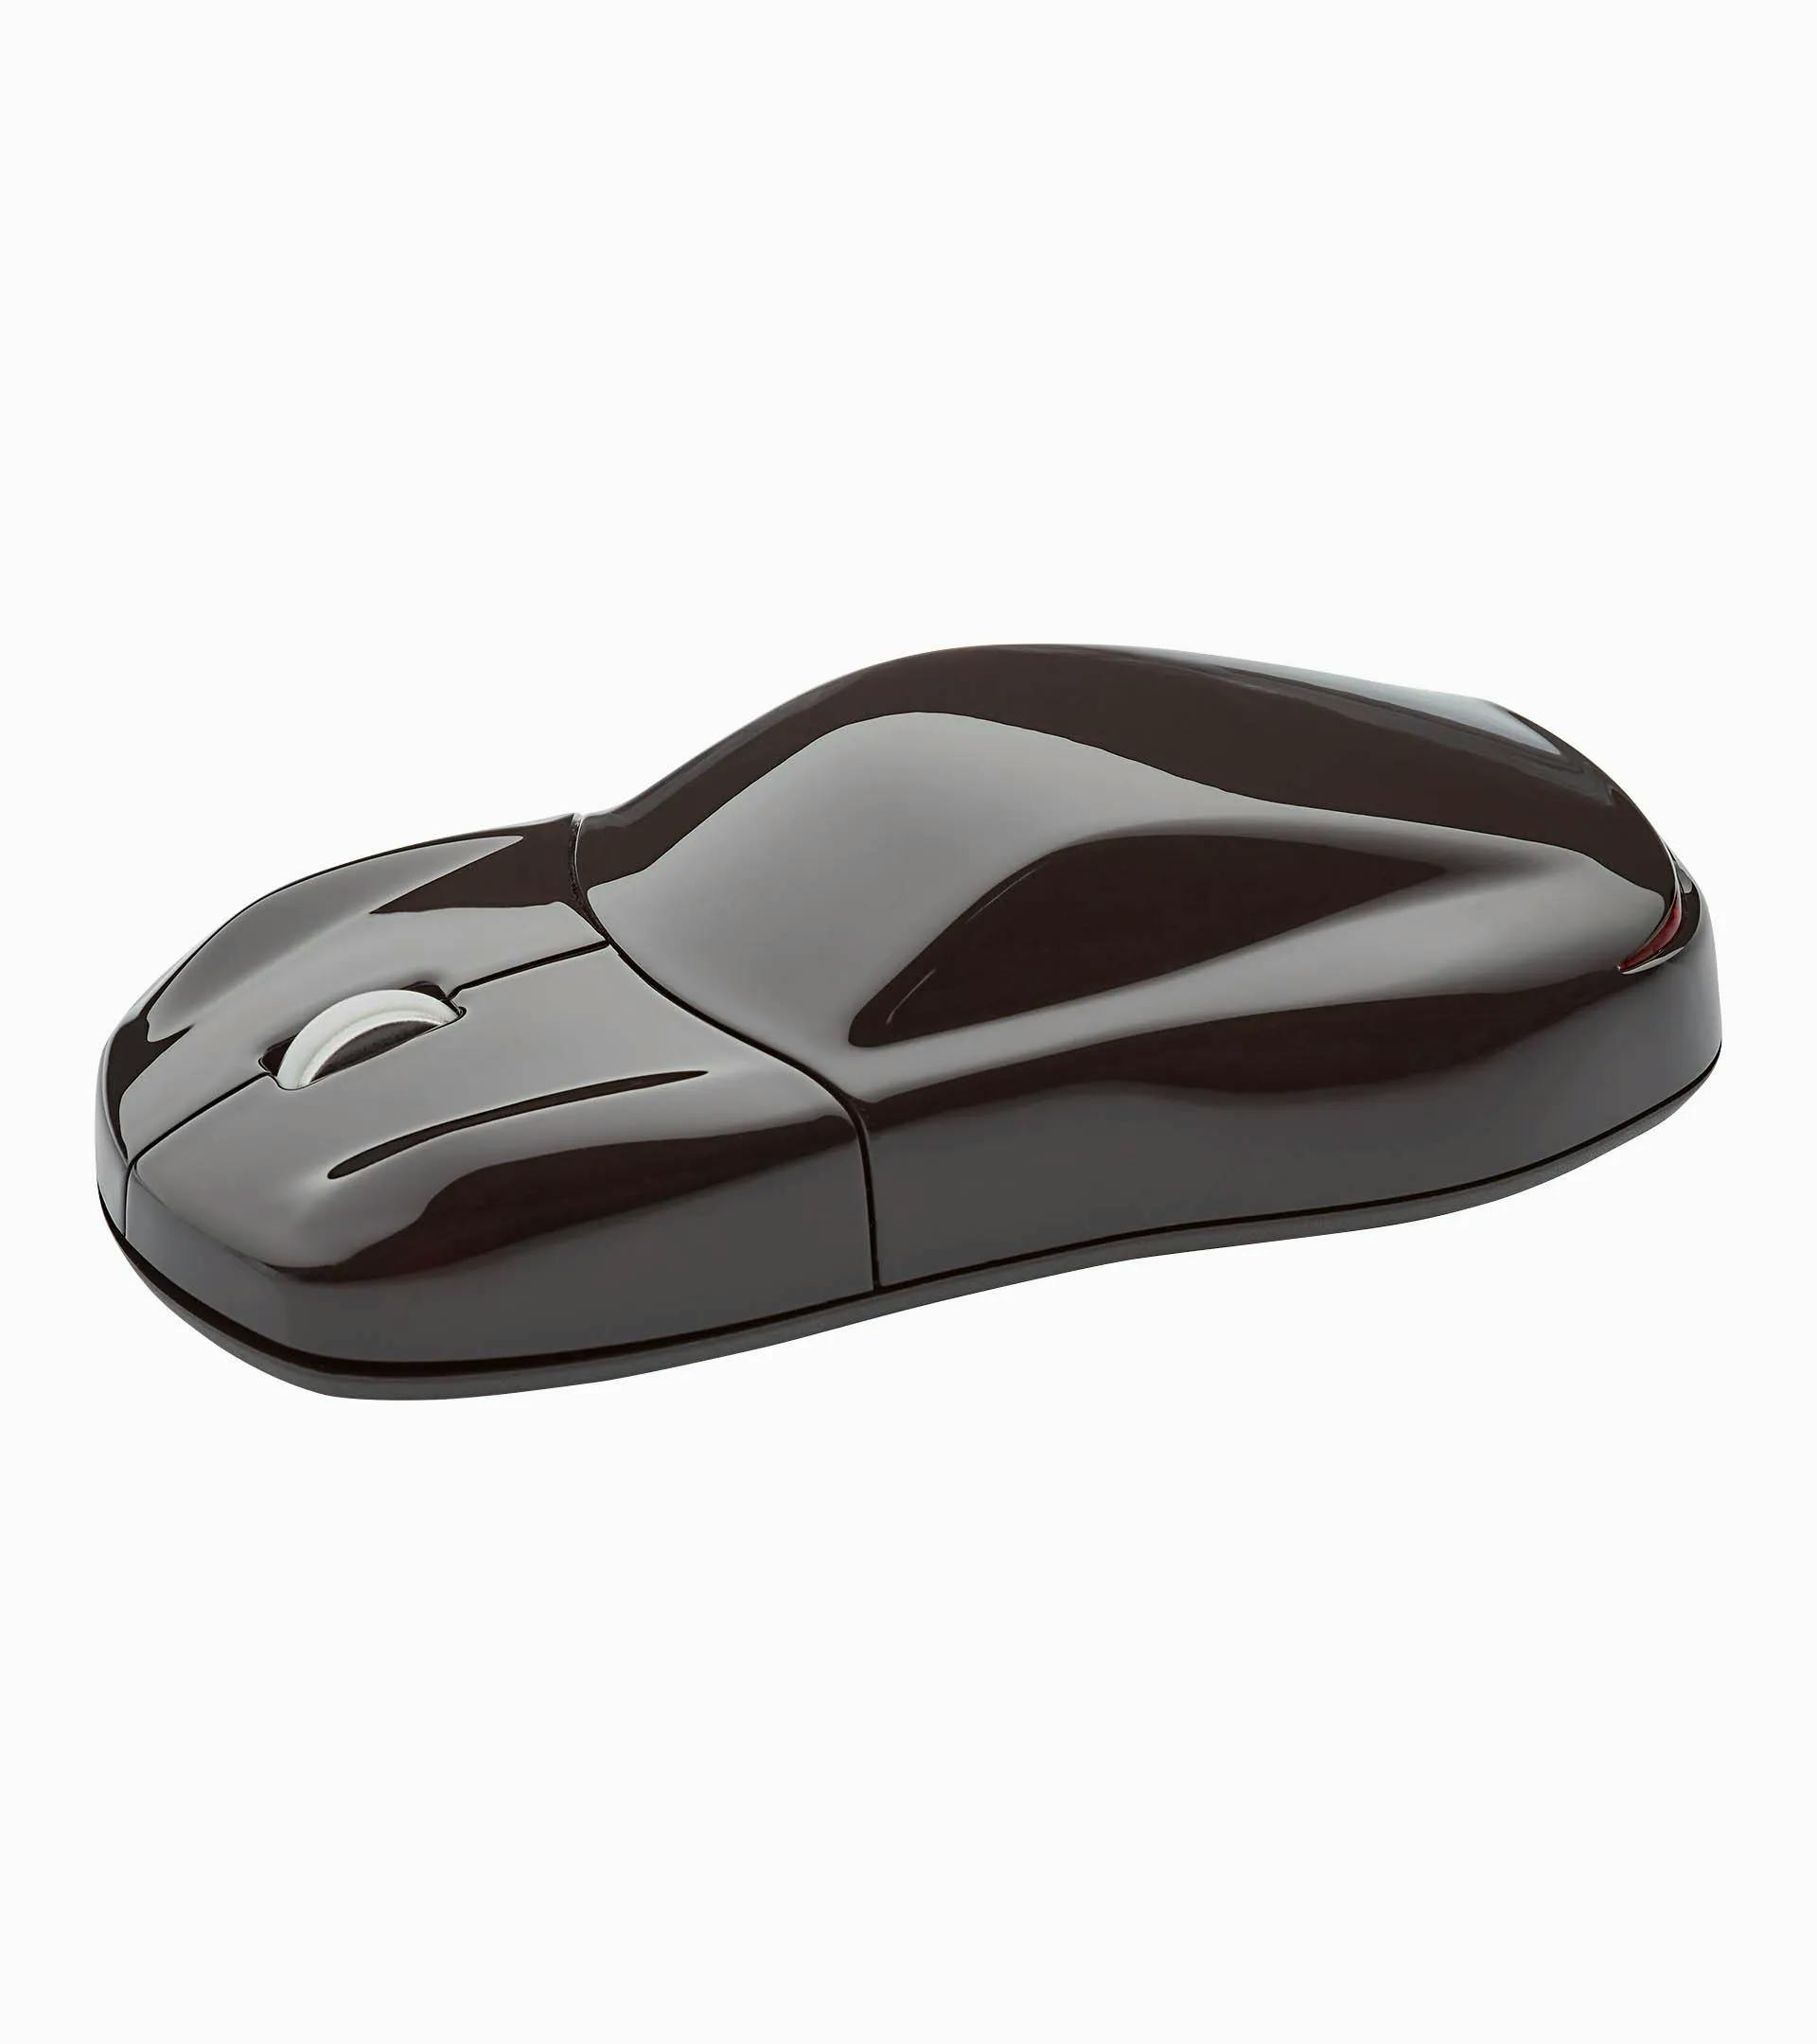 Black computer mouse – Essential 1